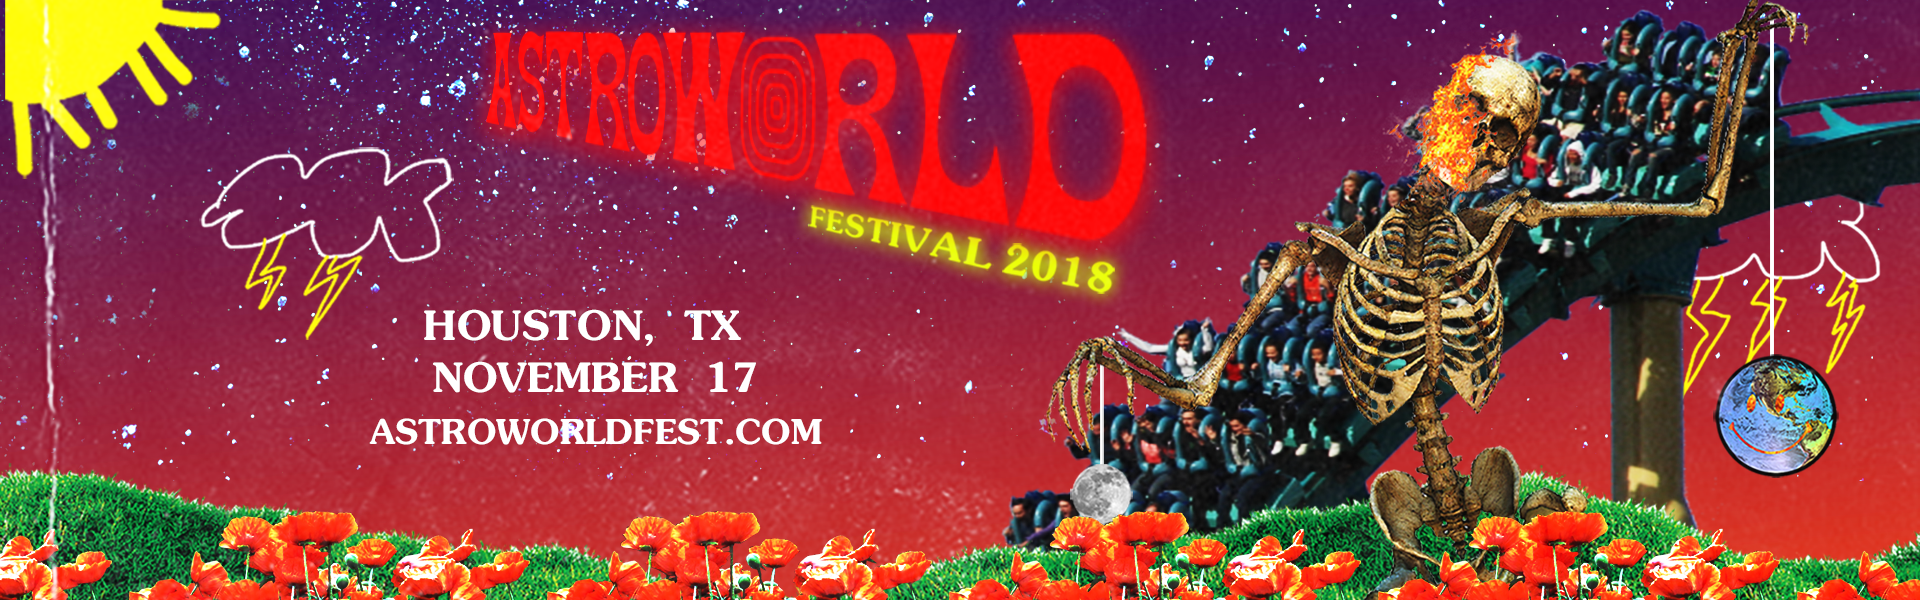 Travis Scott's Astroworld Festival!